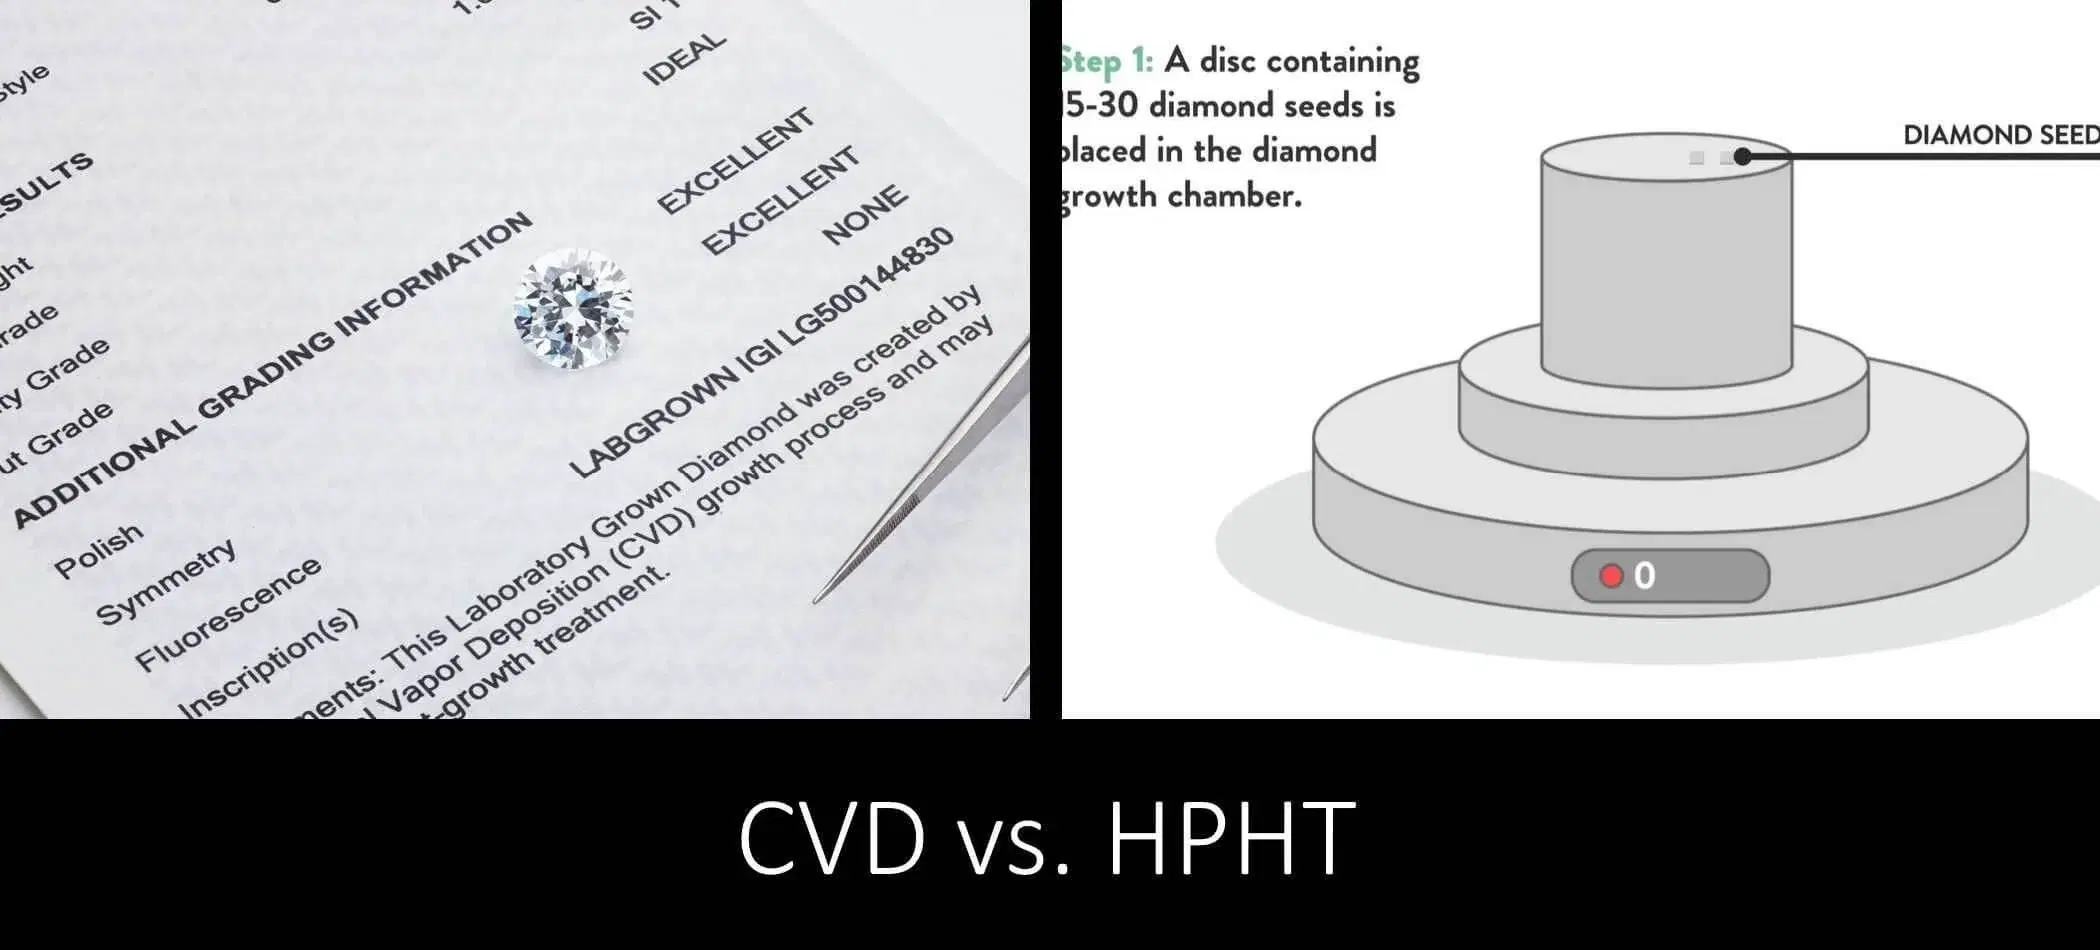 Is CVD Better Than HPHT [Lab Diamonds]?